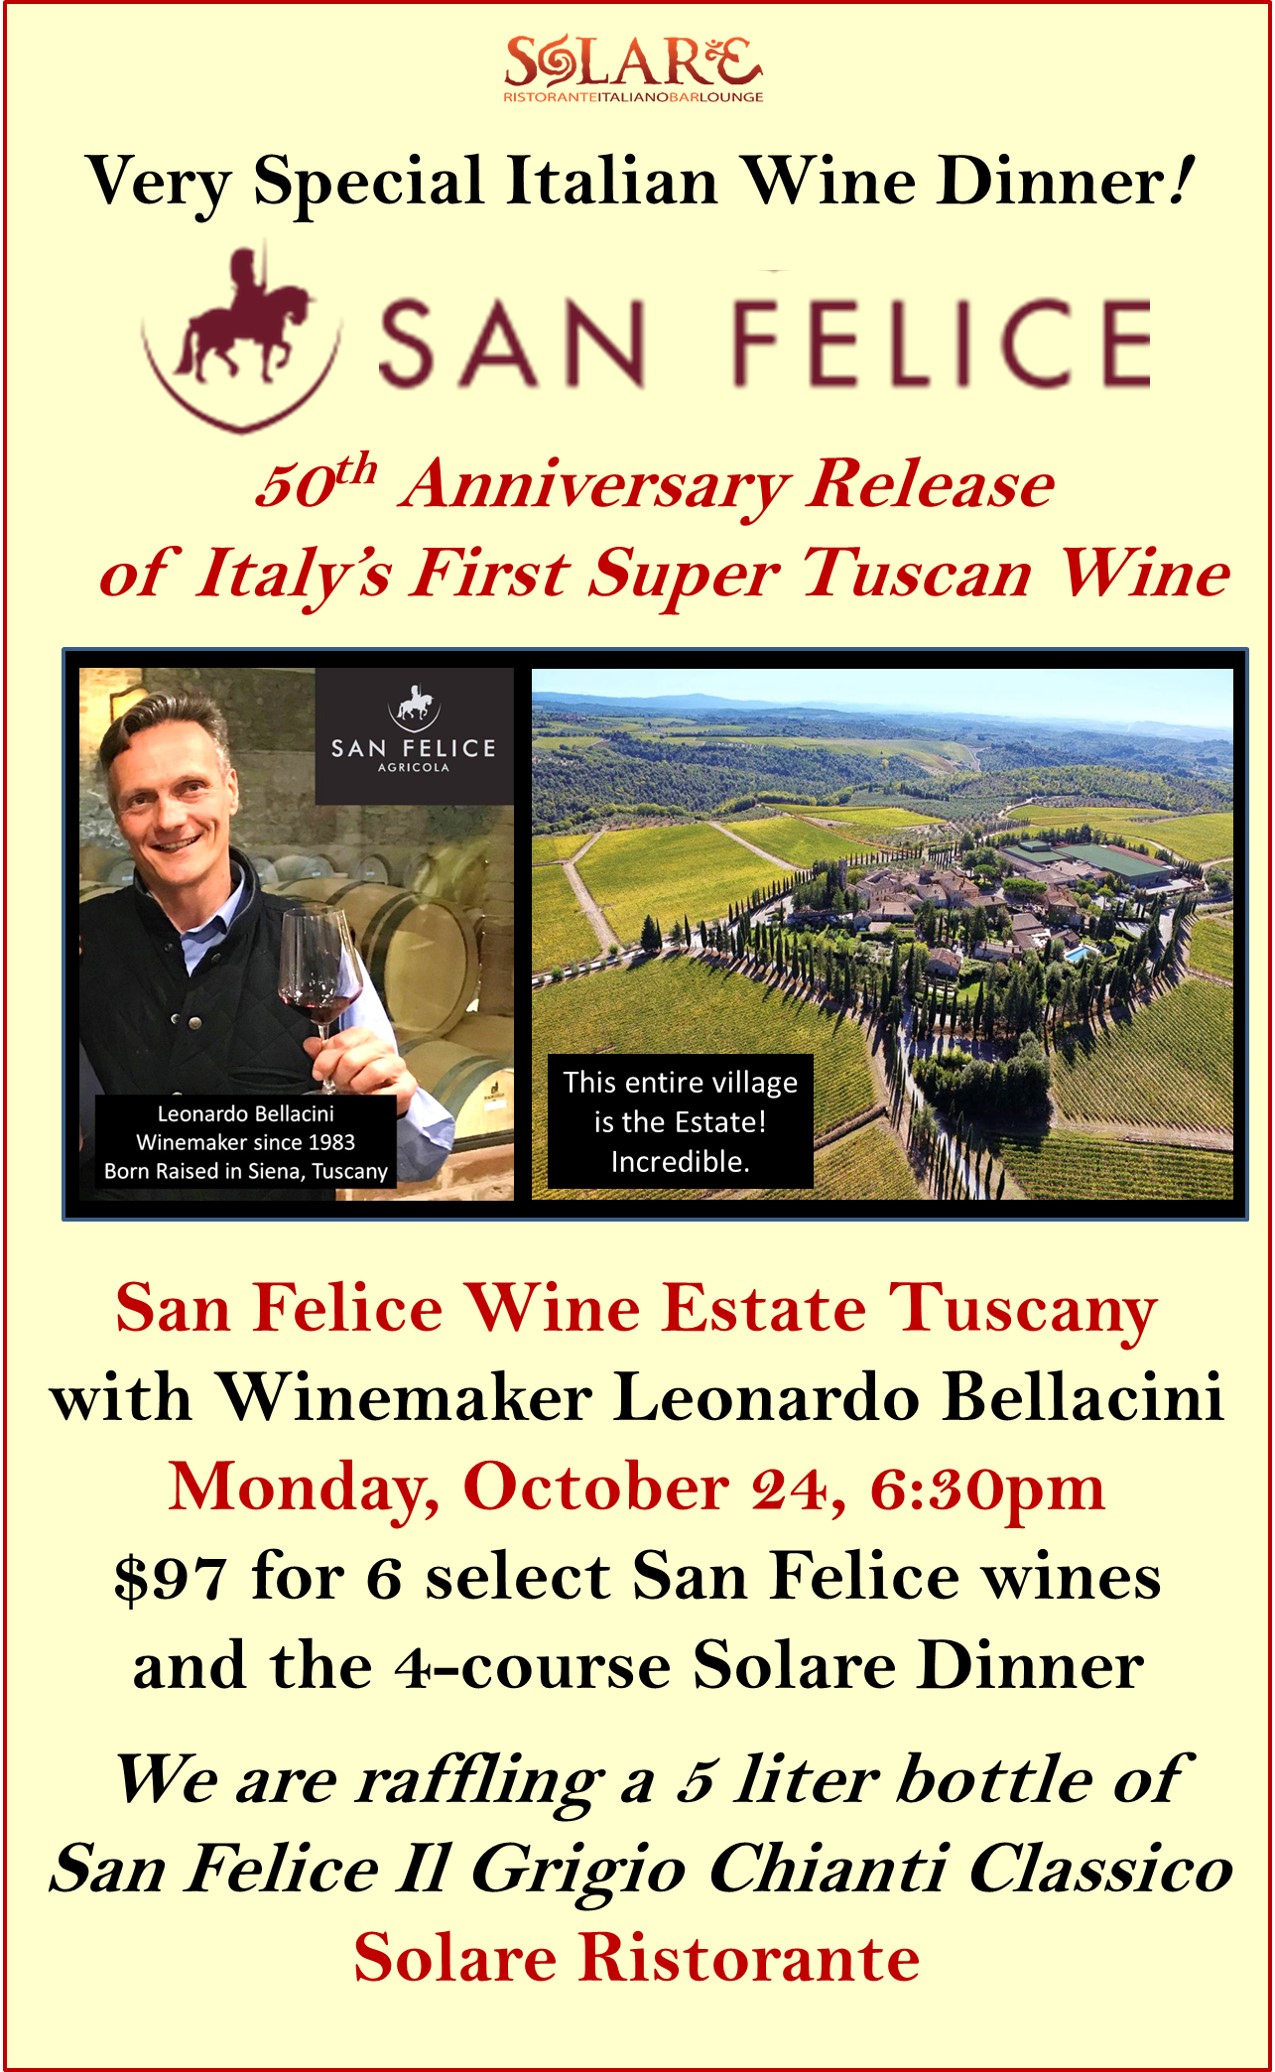 <a id="Solare-San-Felice-Wine-Dinner"></a>Italian Wine Dinner - San Felice in Tuscany - Leonardo Bellacini is here!